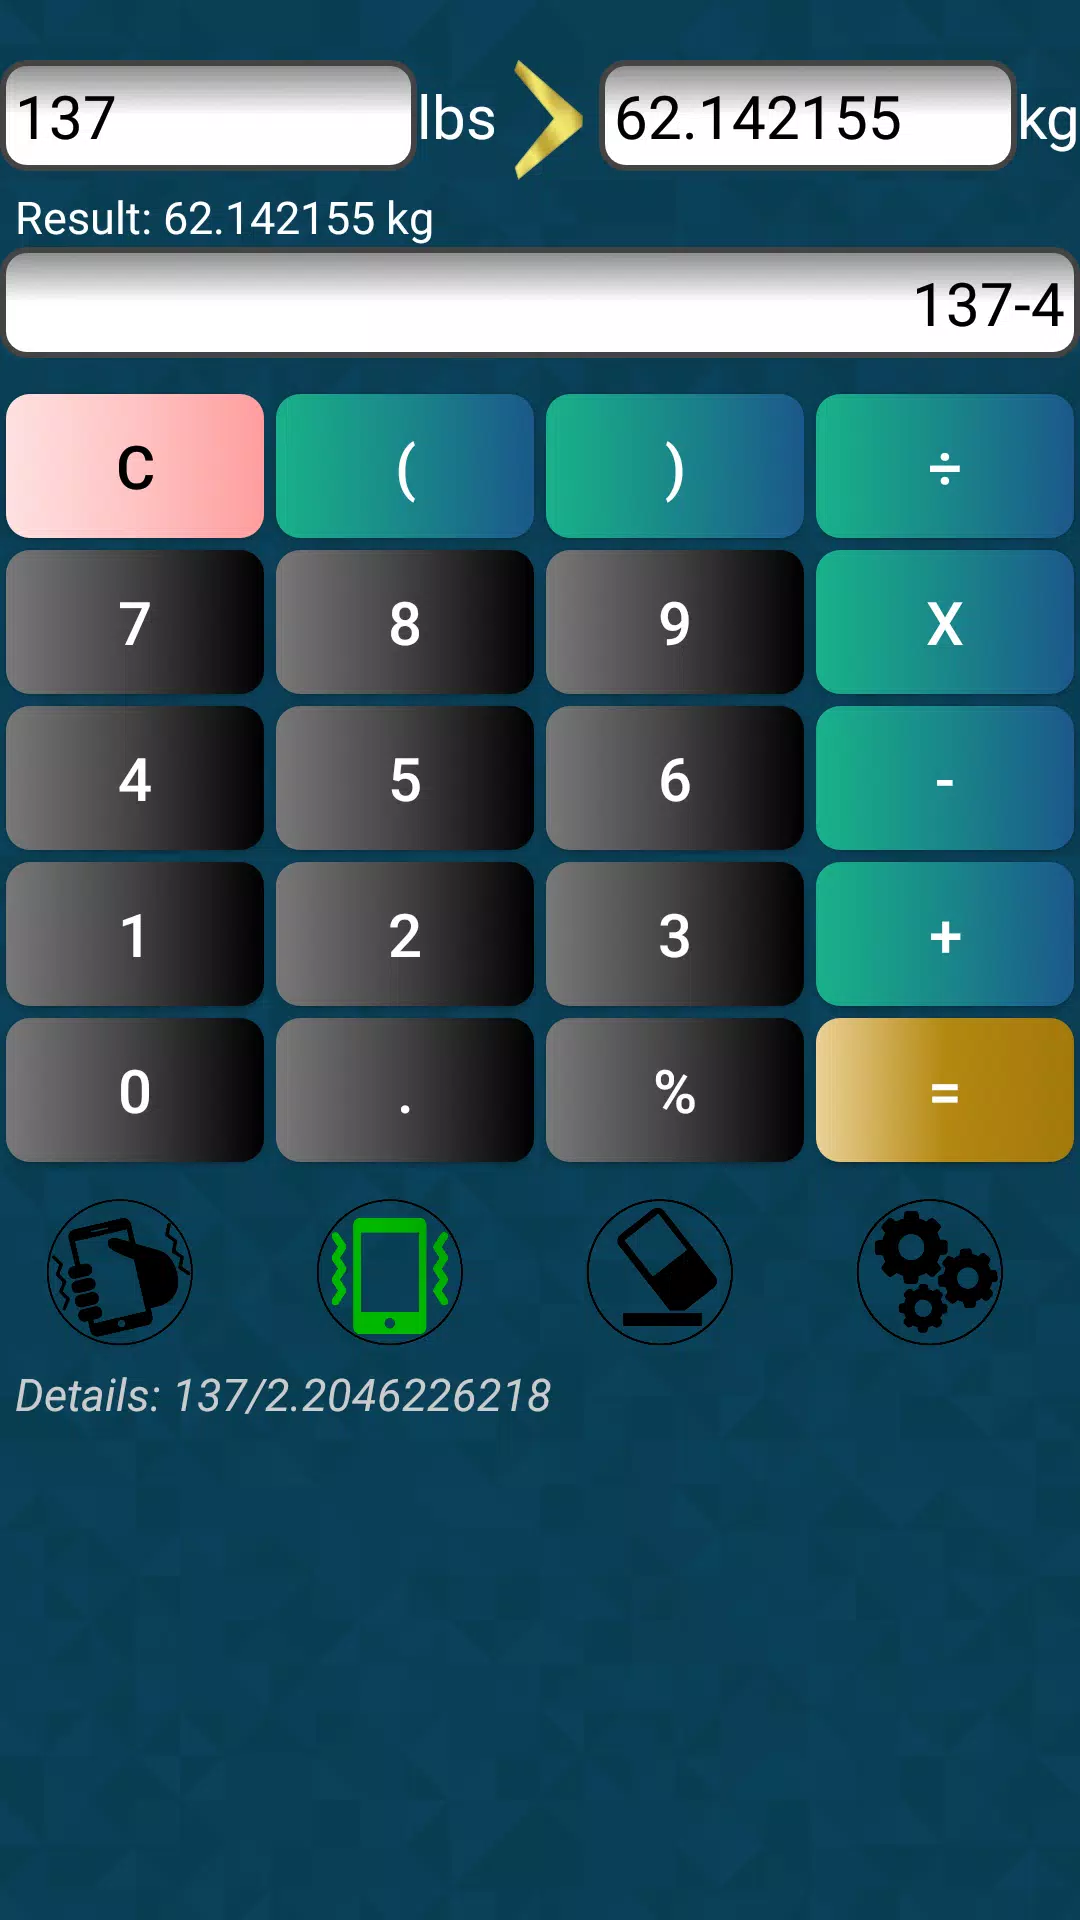 lbs kg de peso convertidor for Android - APK Download